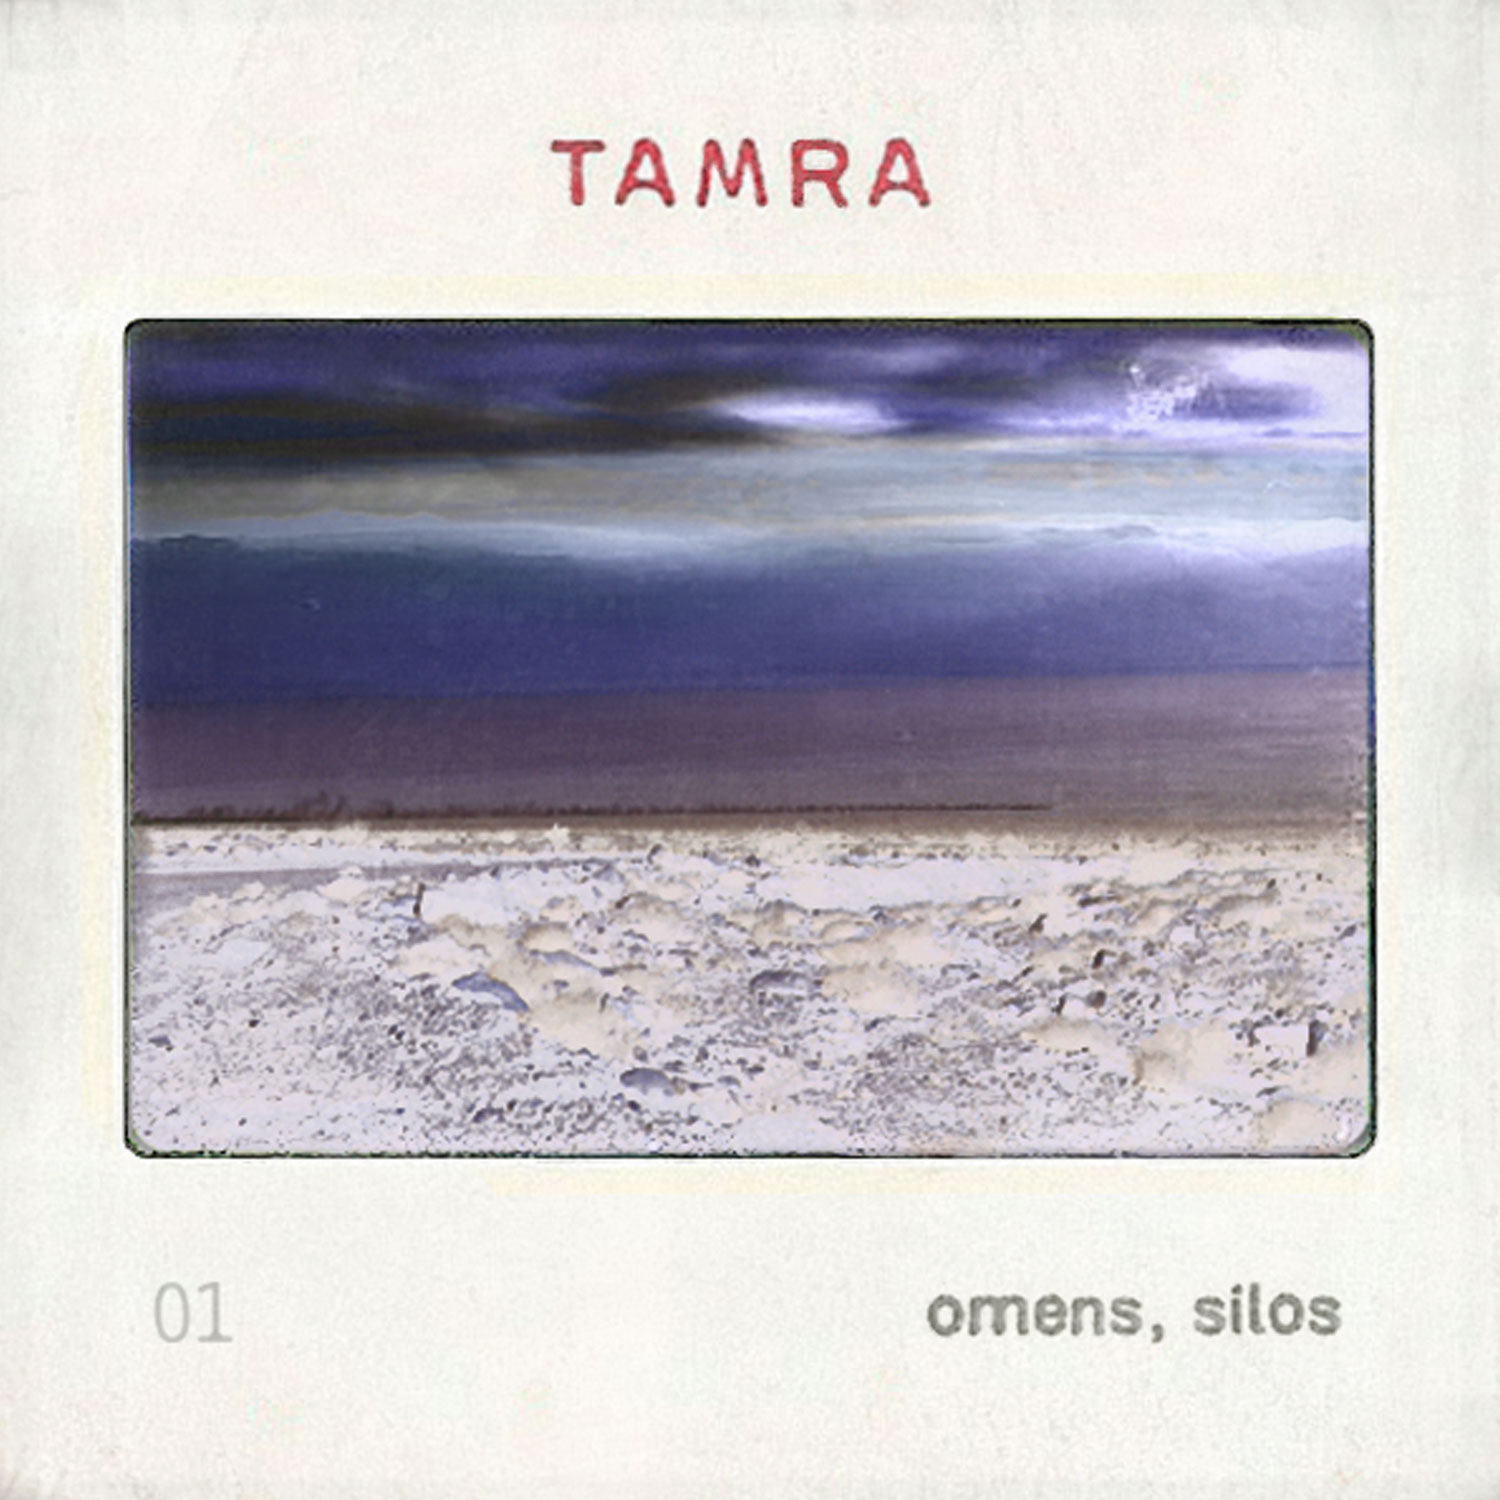 Tamra “Omens, Silos” single artwork